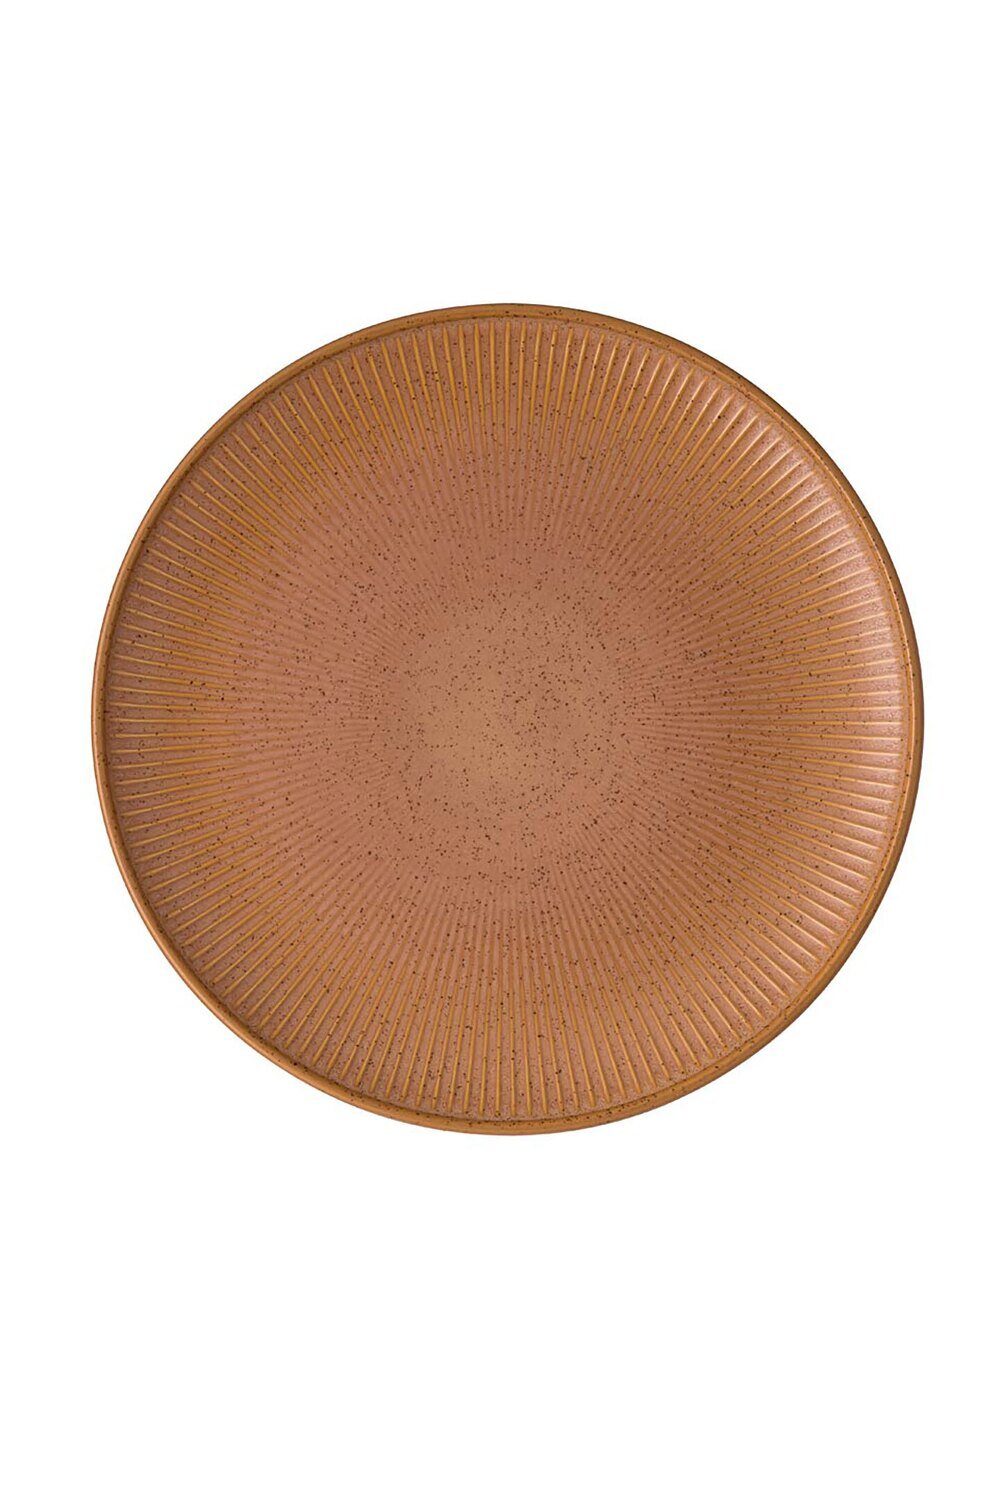 Thomas Clay Earth Dinner Plate 21740-227075-60227